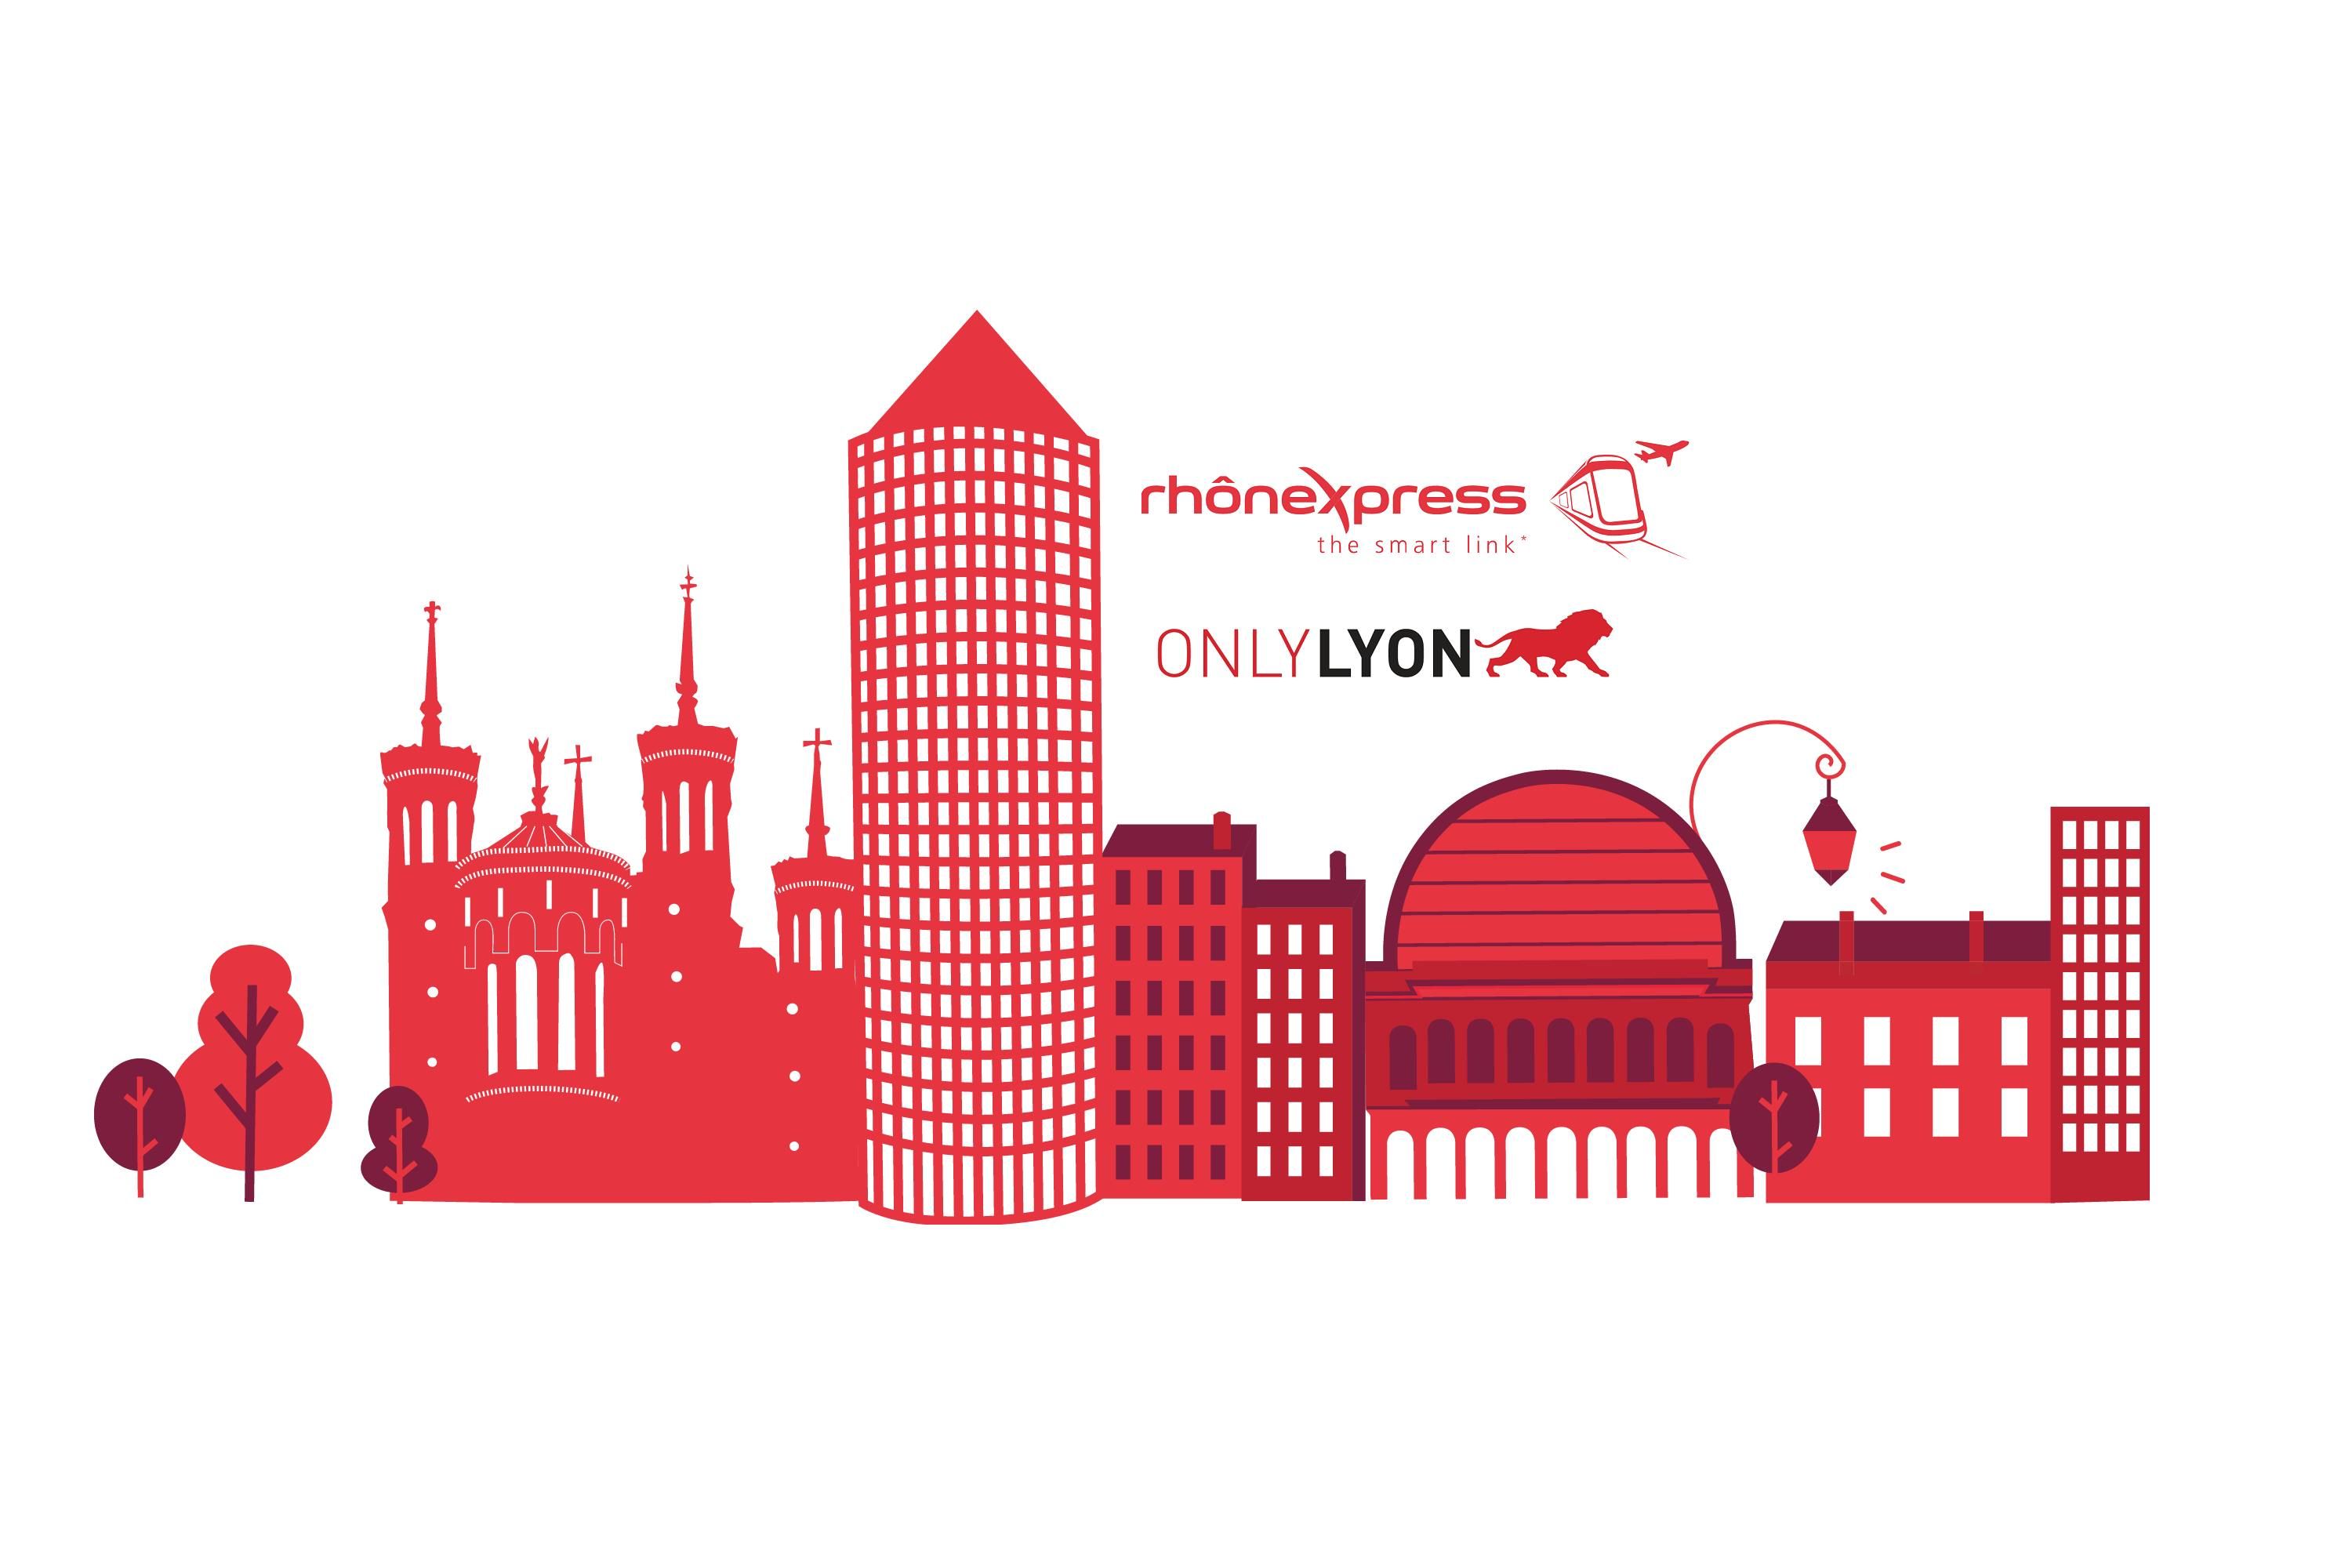 Imagen del tour: Rhonexpress y tarjeta de la ciudad de Lyon